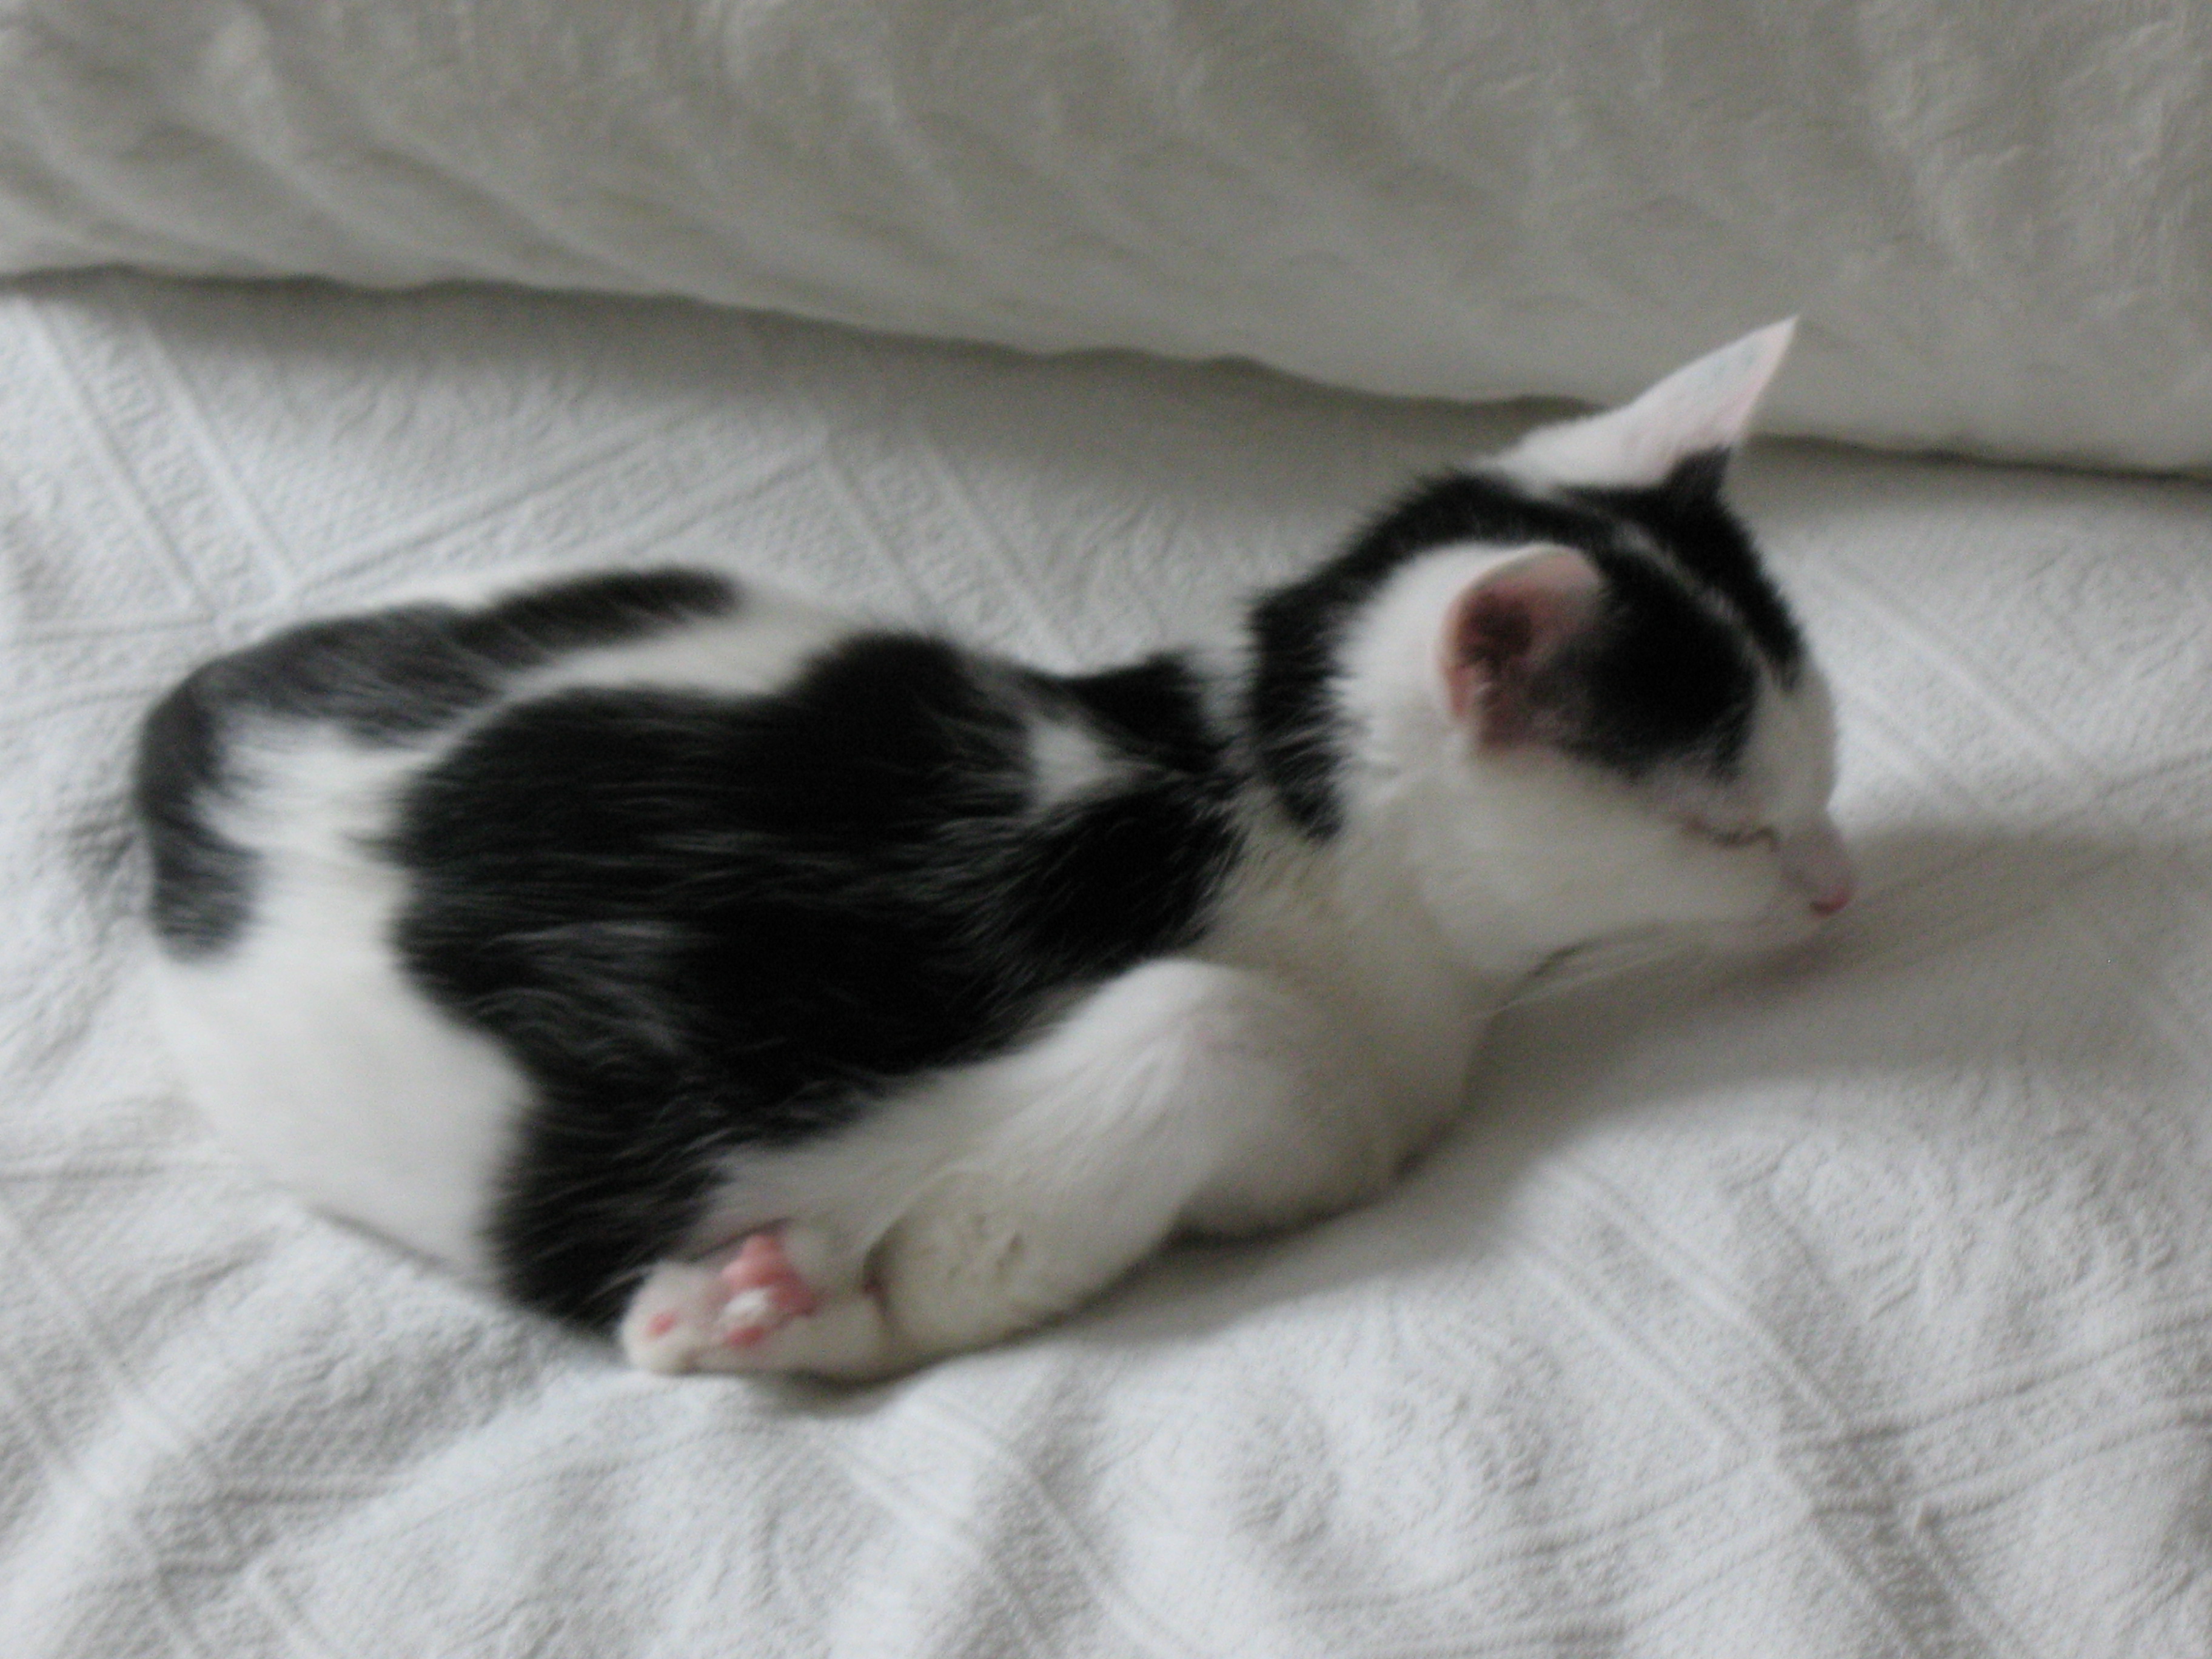 File:Sleeping cat named Kimchi.jpg - Wikimedia Commons